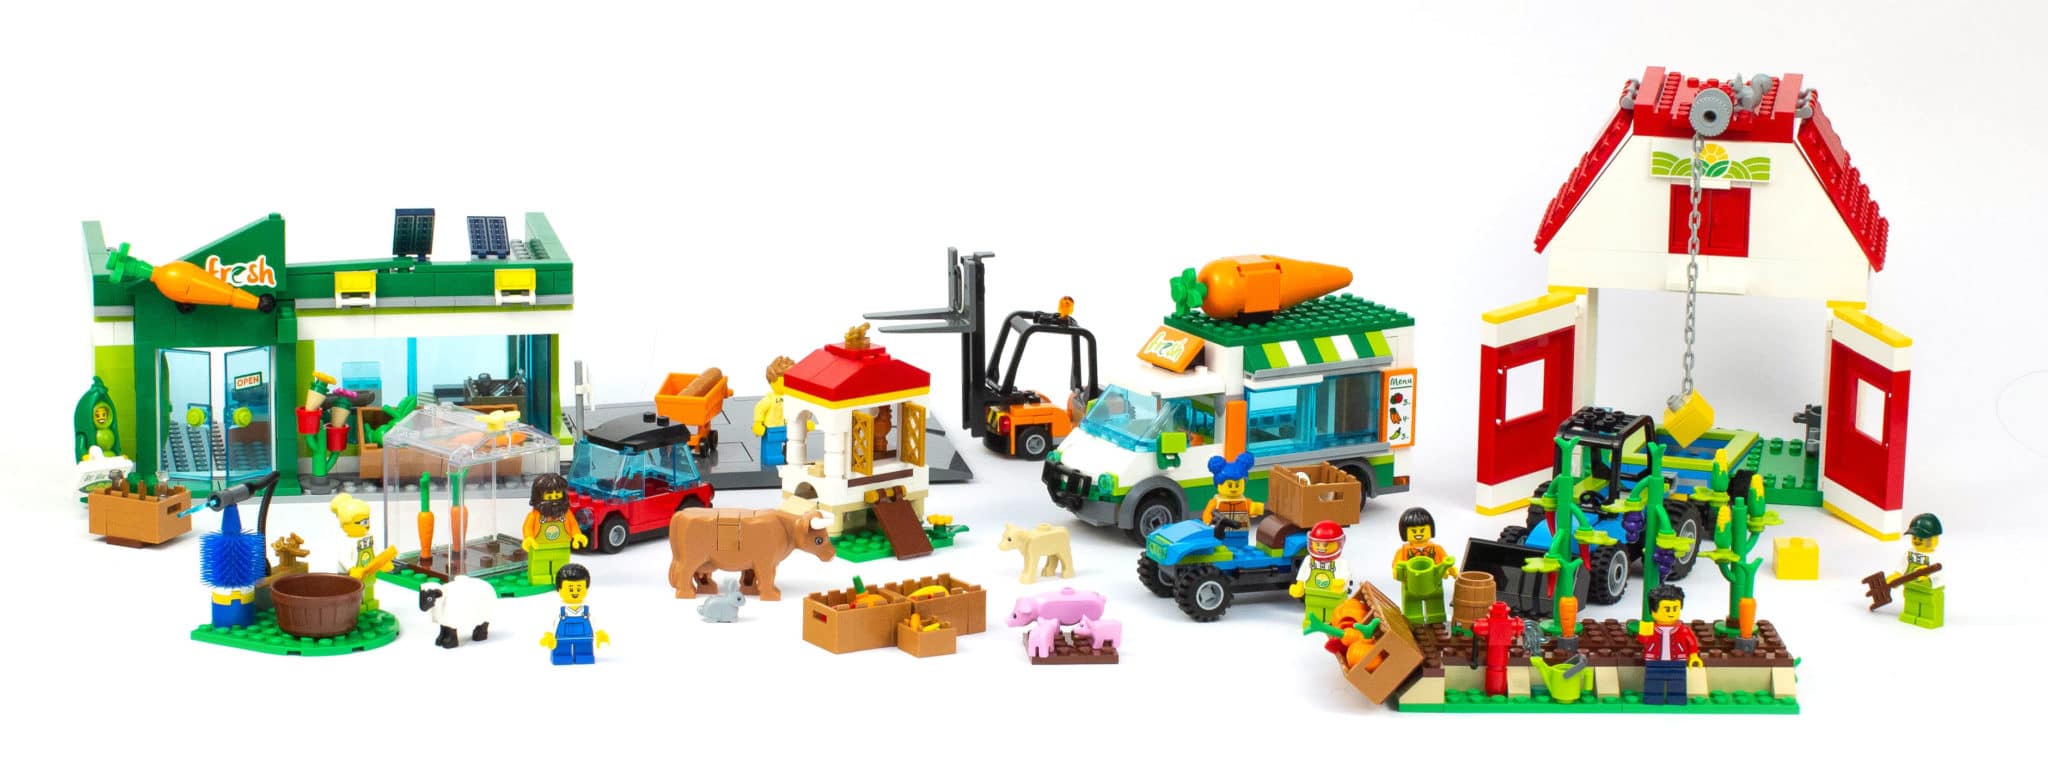 Review LEGO Bauernhof Reihe